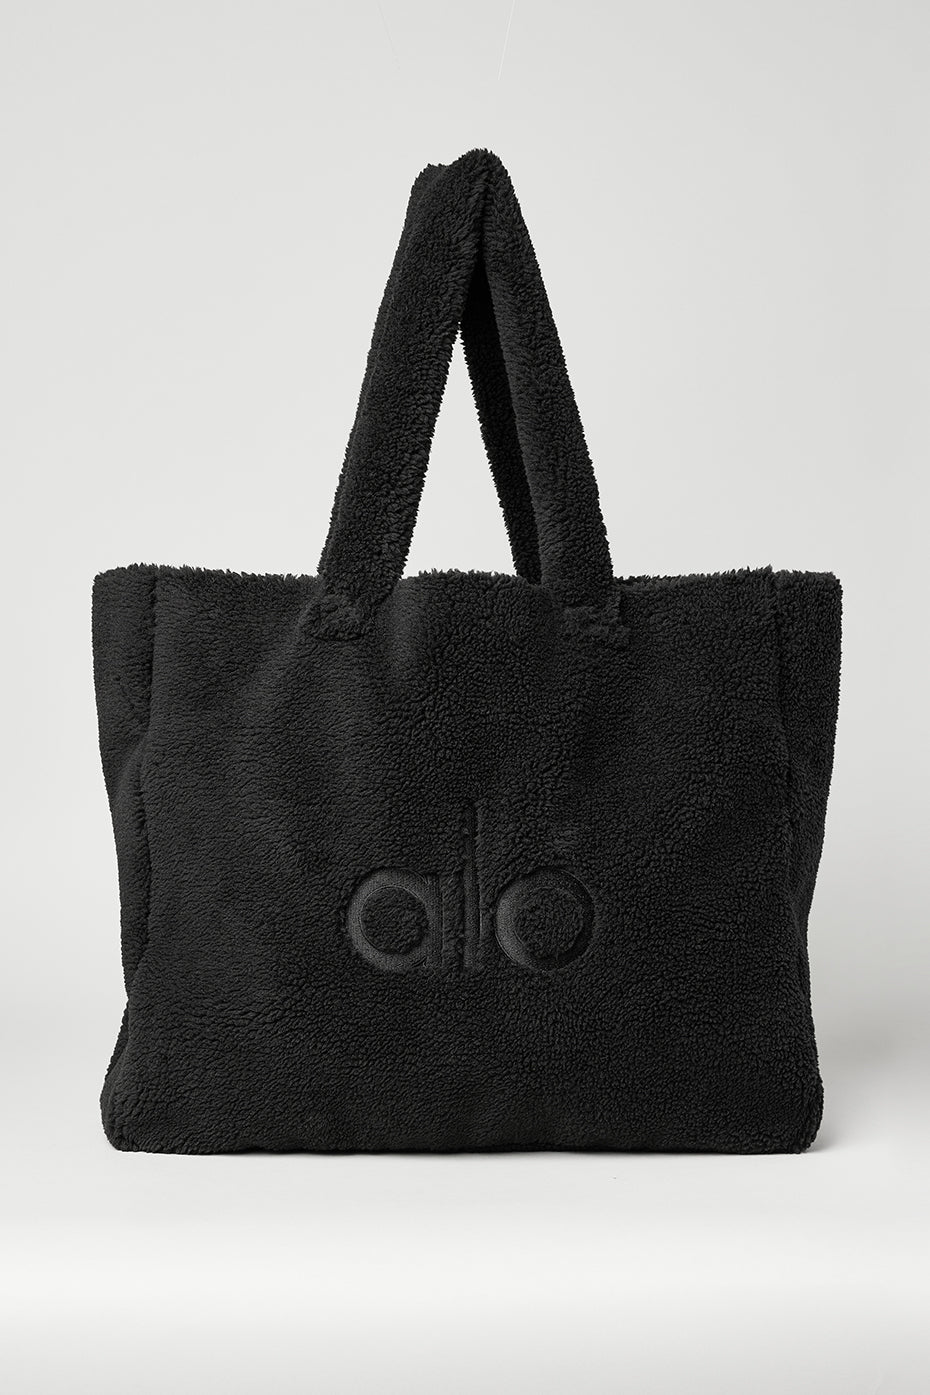 ALO Yoga, Bags, Alo Yoga Mini Stow Backpack Black